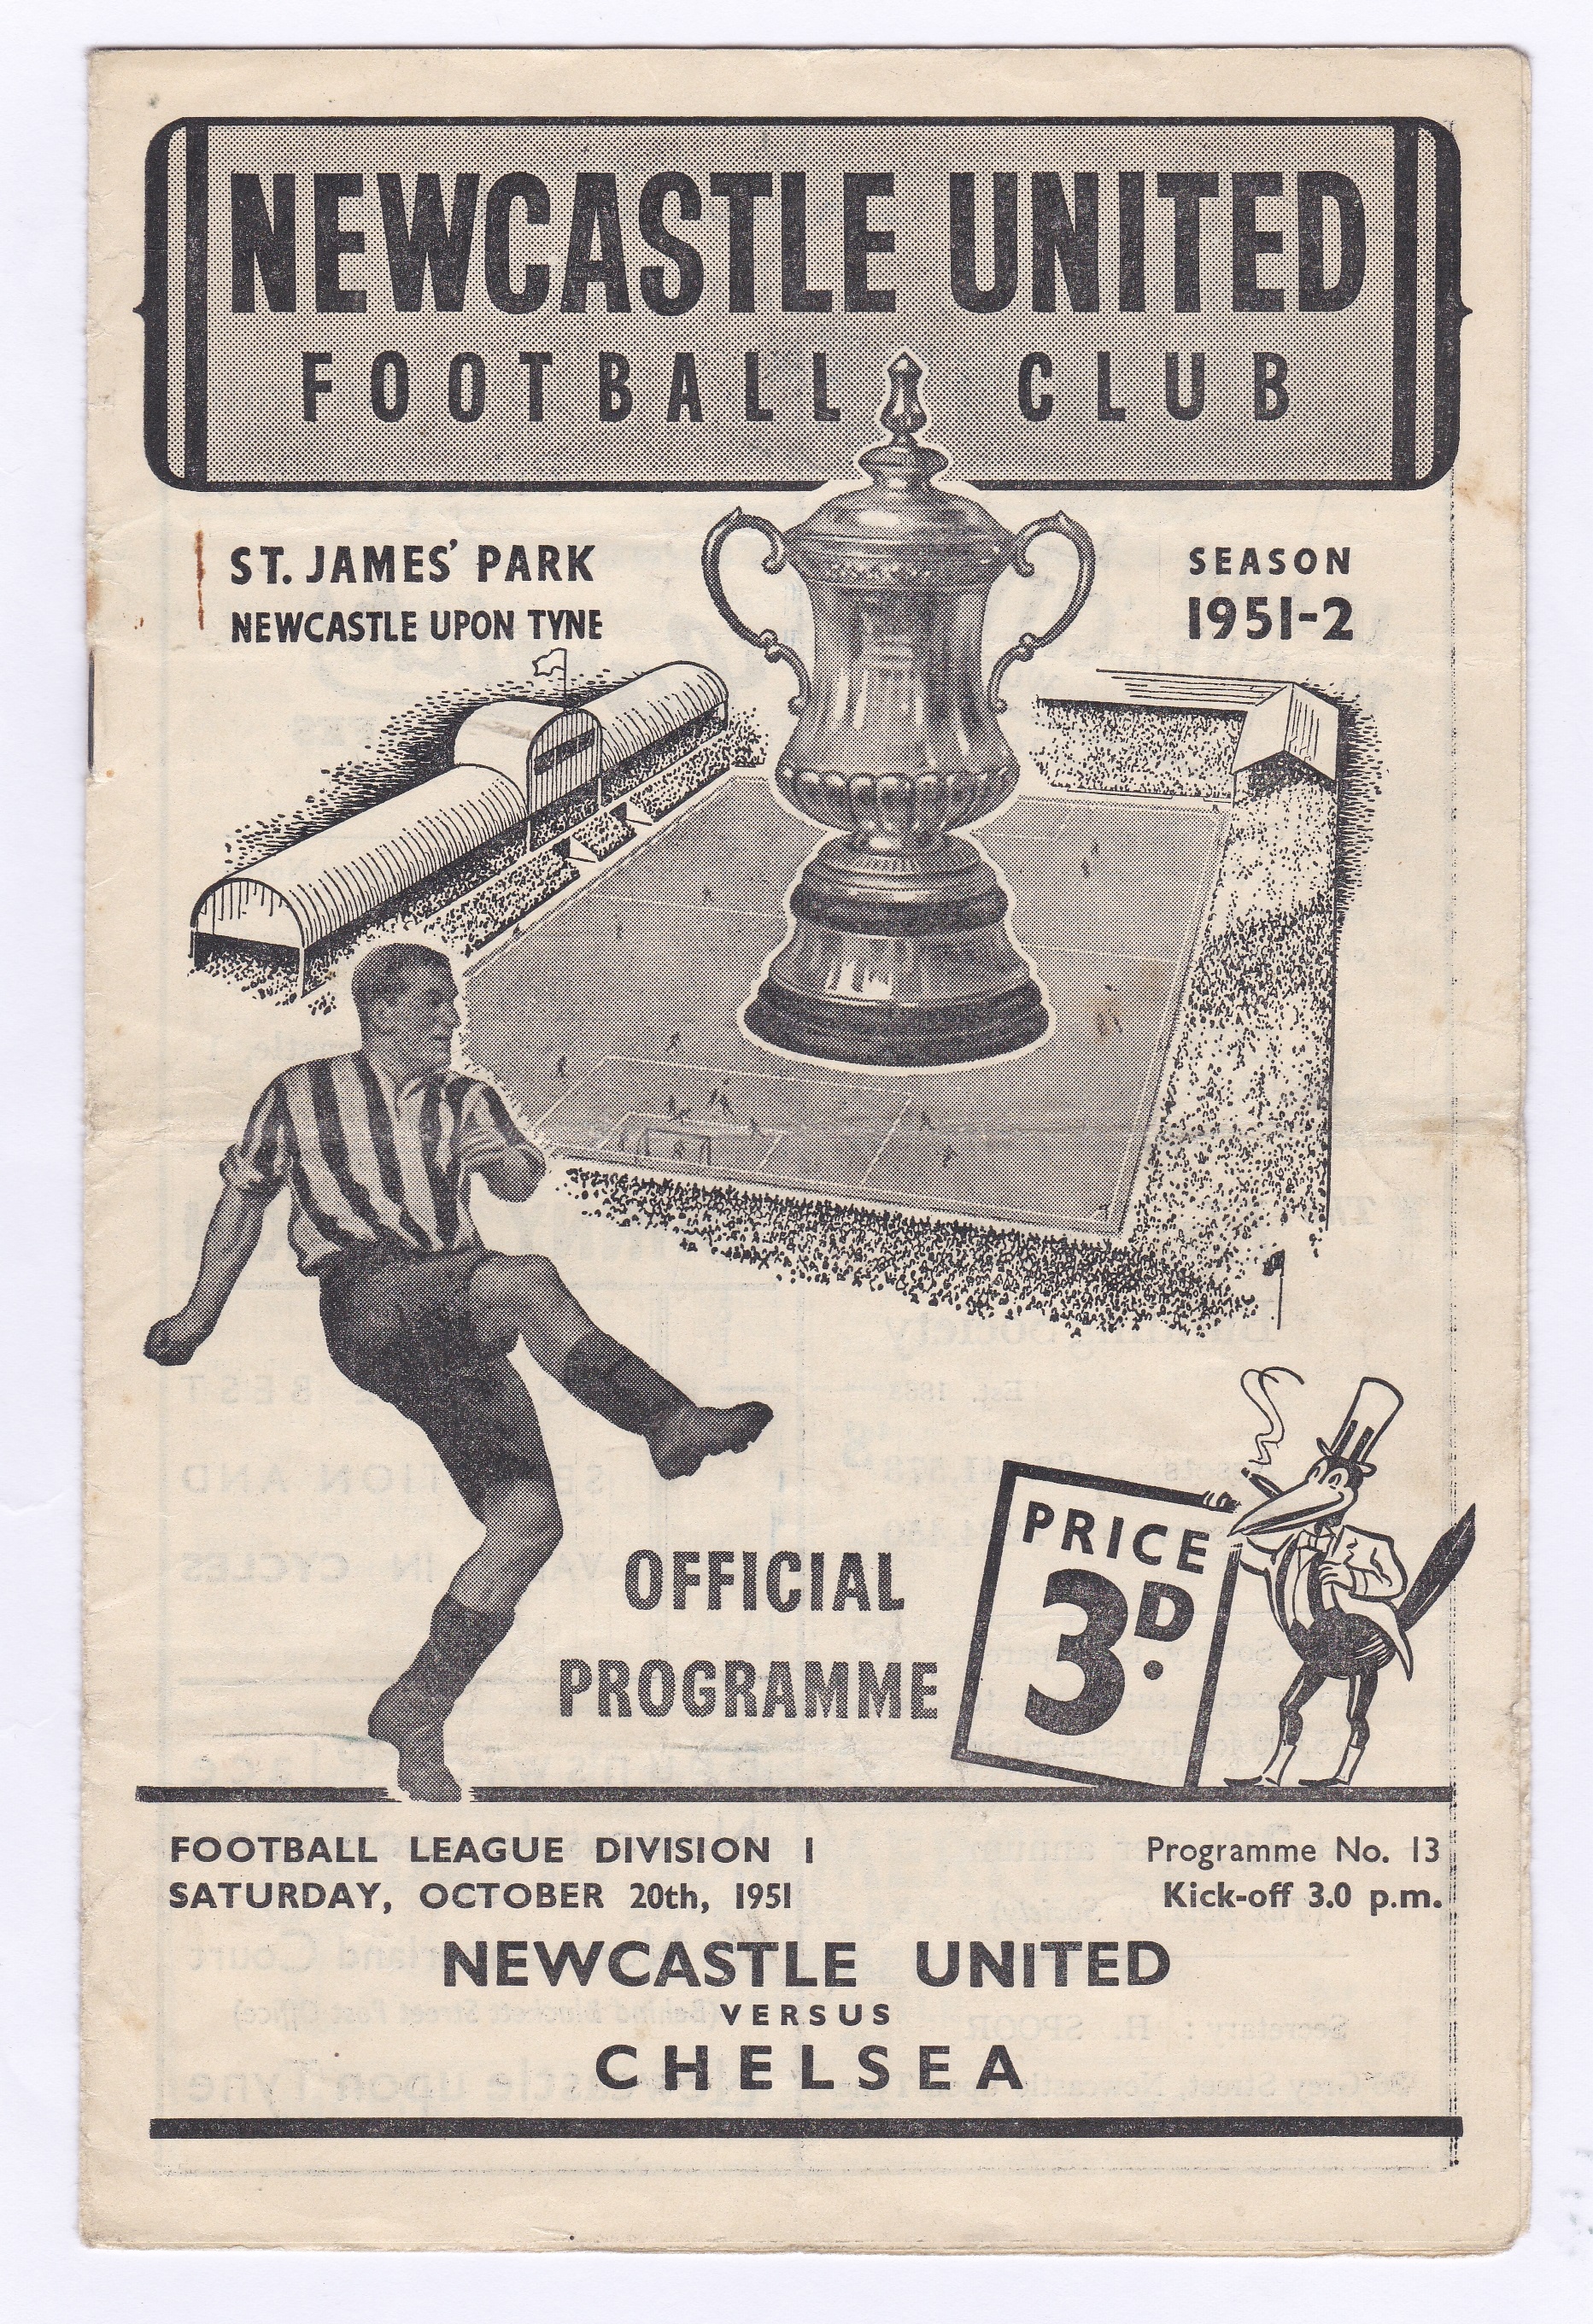 Newcastle v Chelsea 1951 20th October Football League Division 1 horizontal & vertical crease